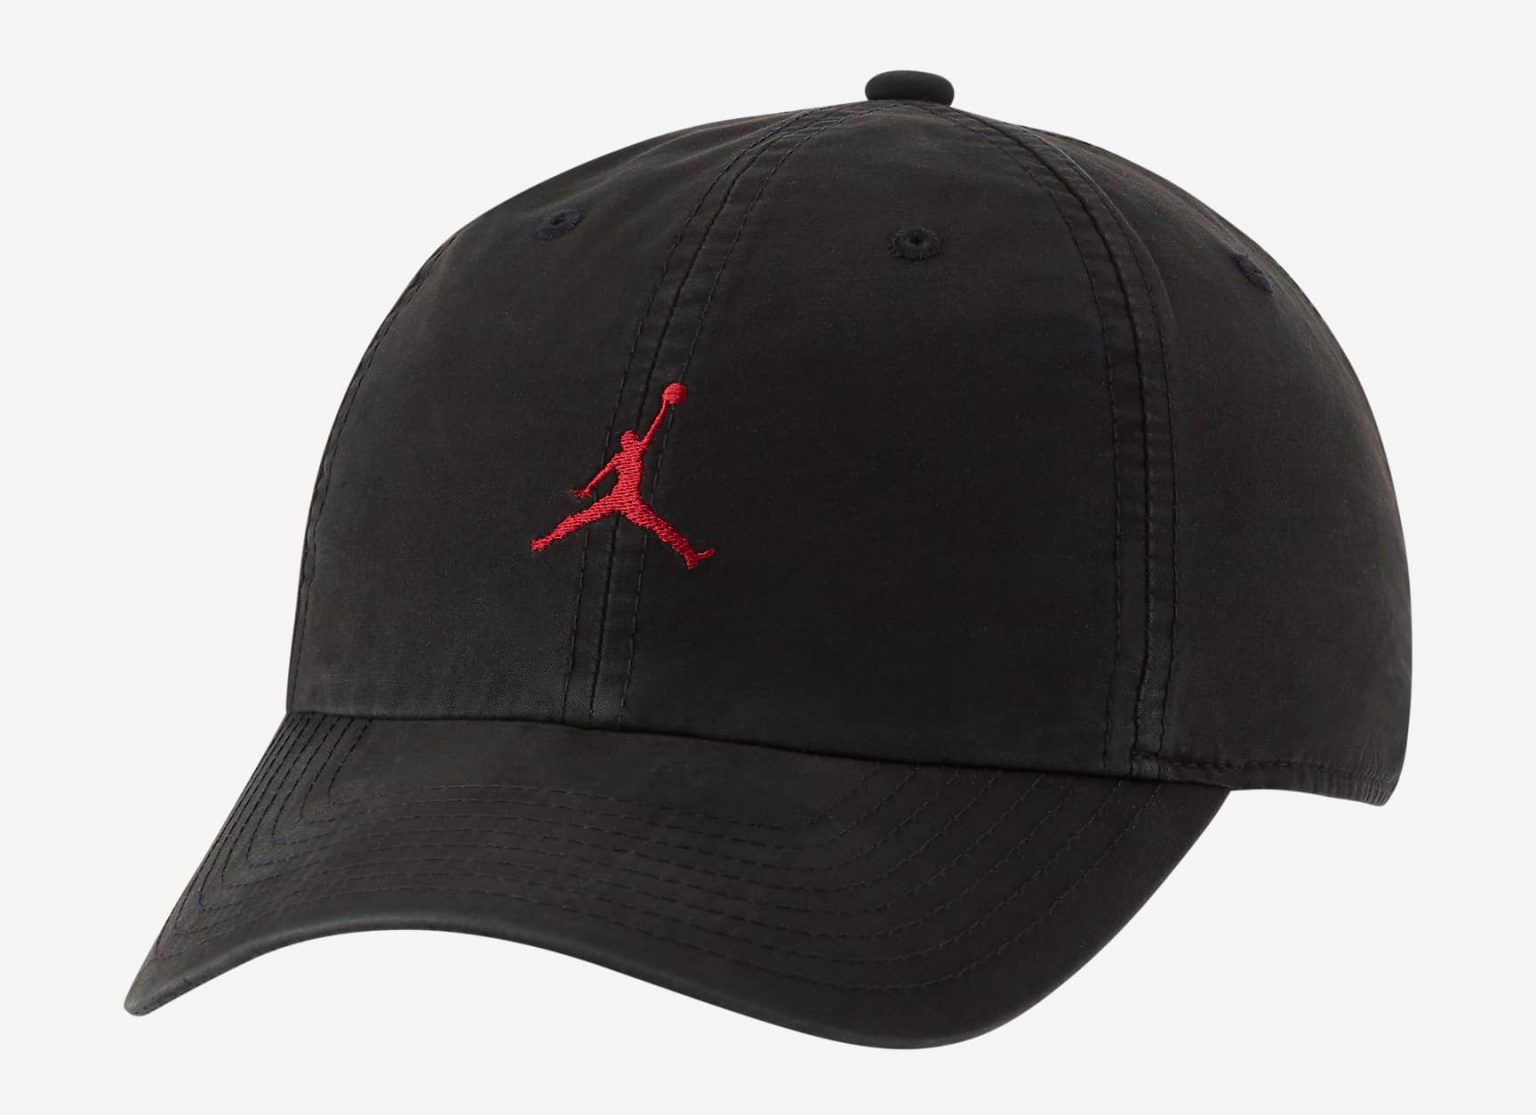 Air Jordan 13 Red Flint Jumpman Bucket and Strapback Hats